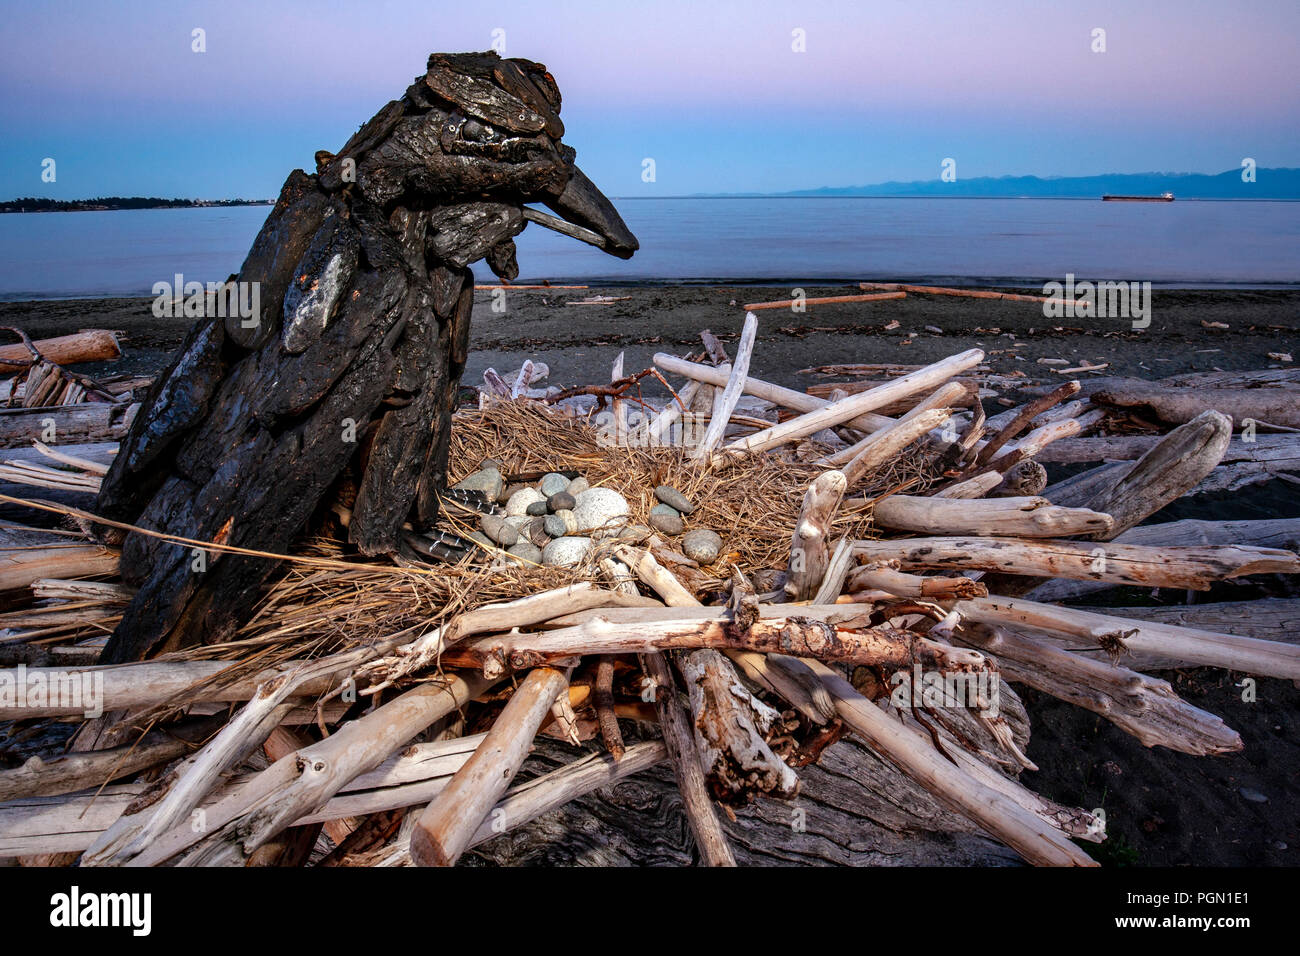 Raven - Driftwood Kunst von Paul Lewis - esquimalt Lagune, Victoria, Vancouver Island, British Columbia, Kanada Stockfoto